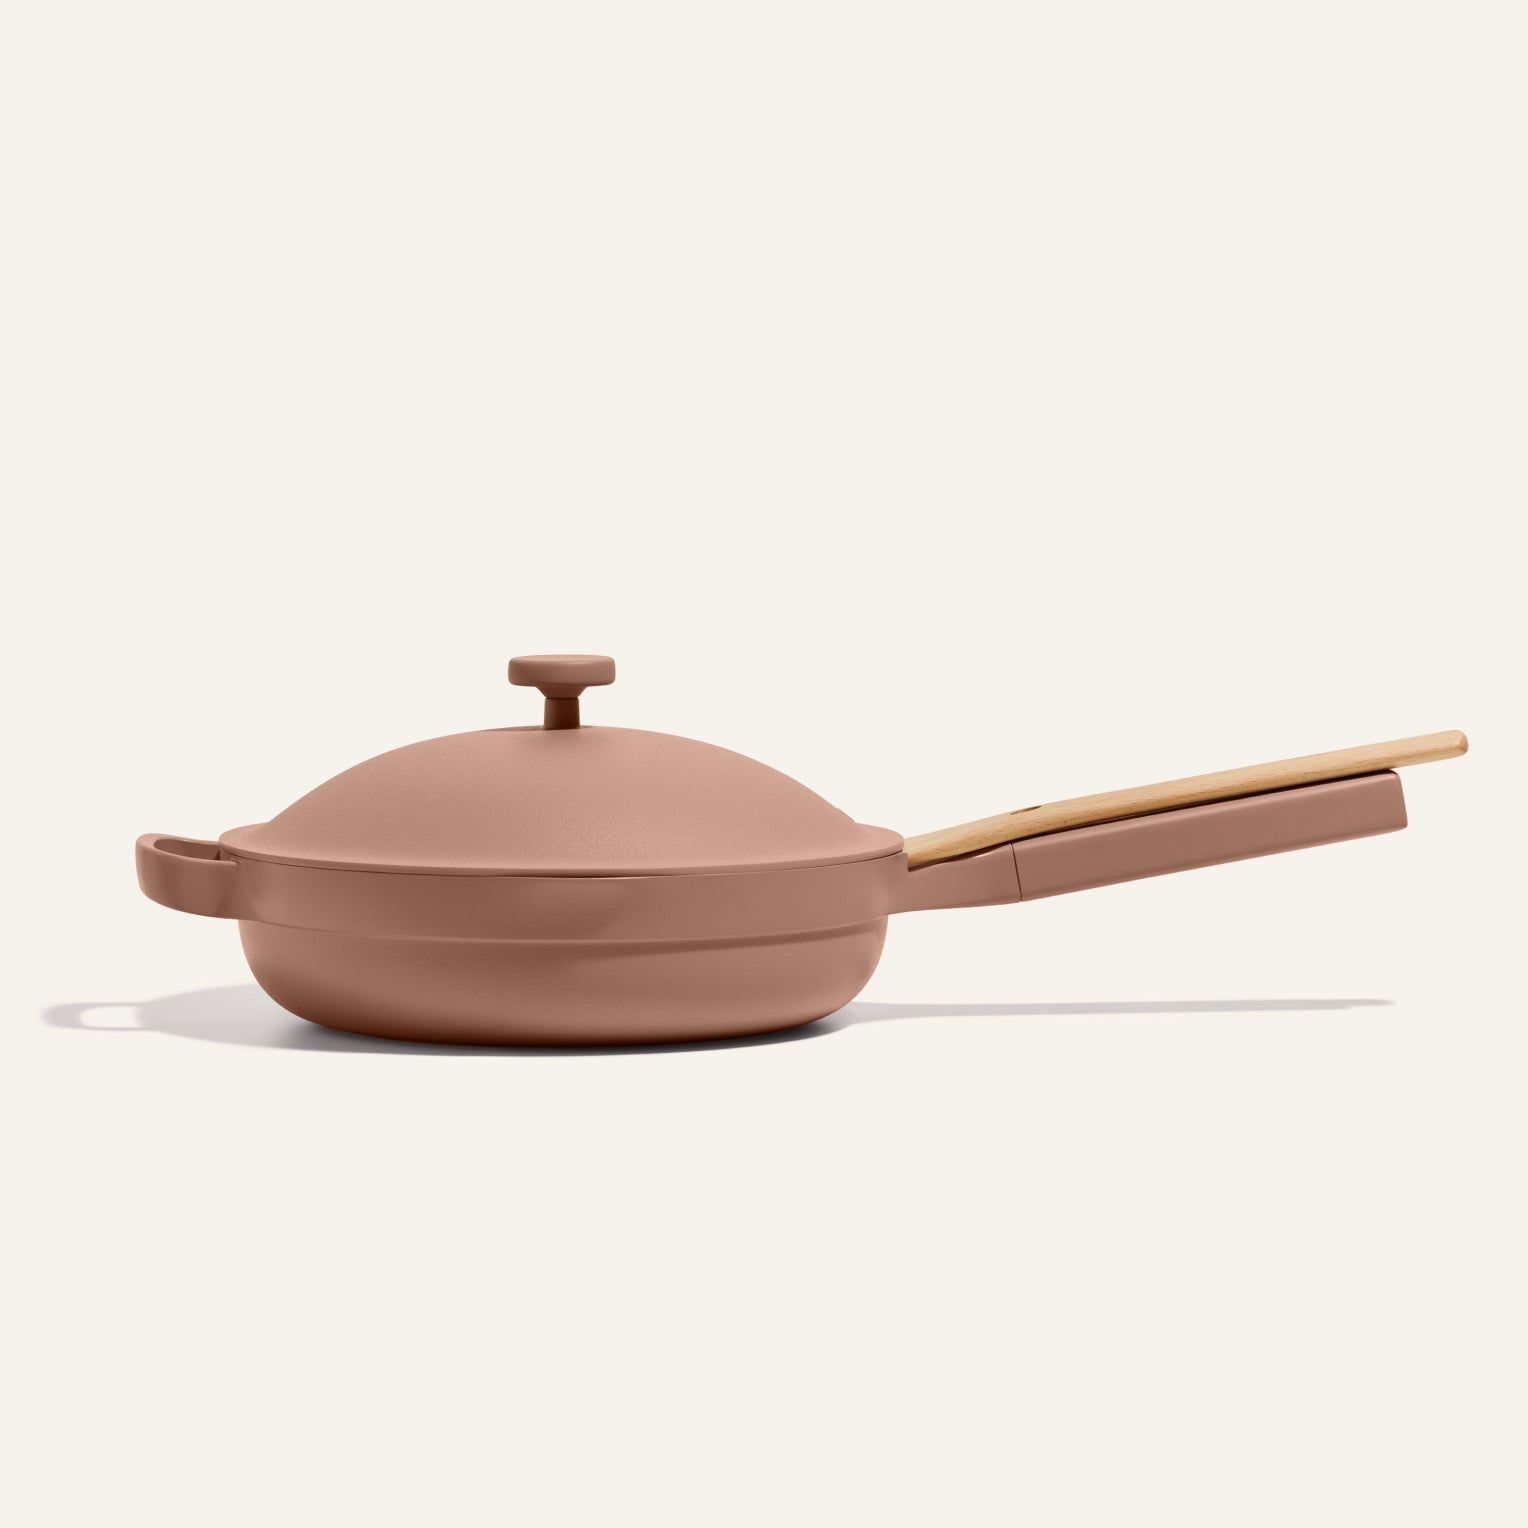 Hudson Ceramic Nonstick Pot 2.6qt Cookware, Pots and Pans, Copper